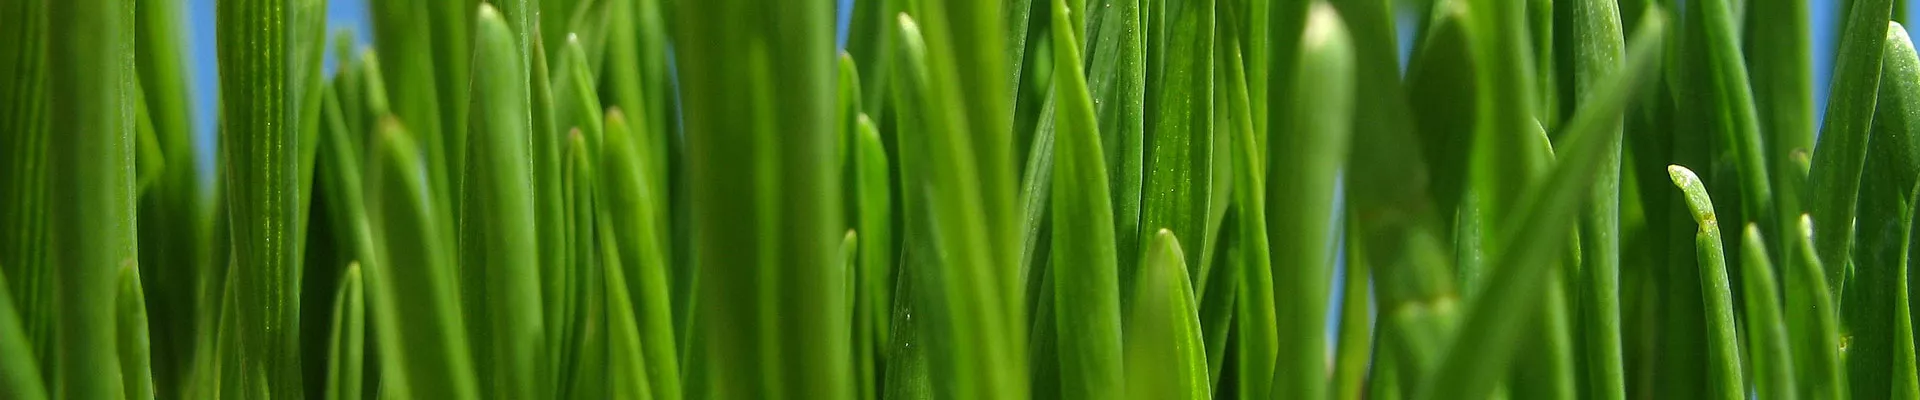 Barley grass - Grow it yourself